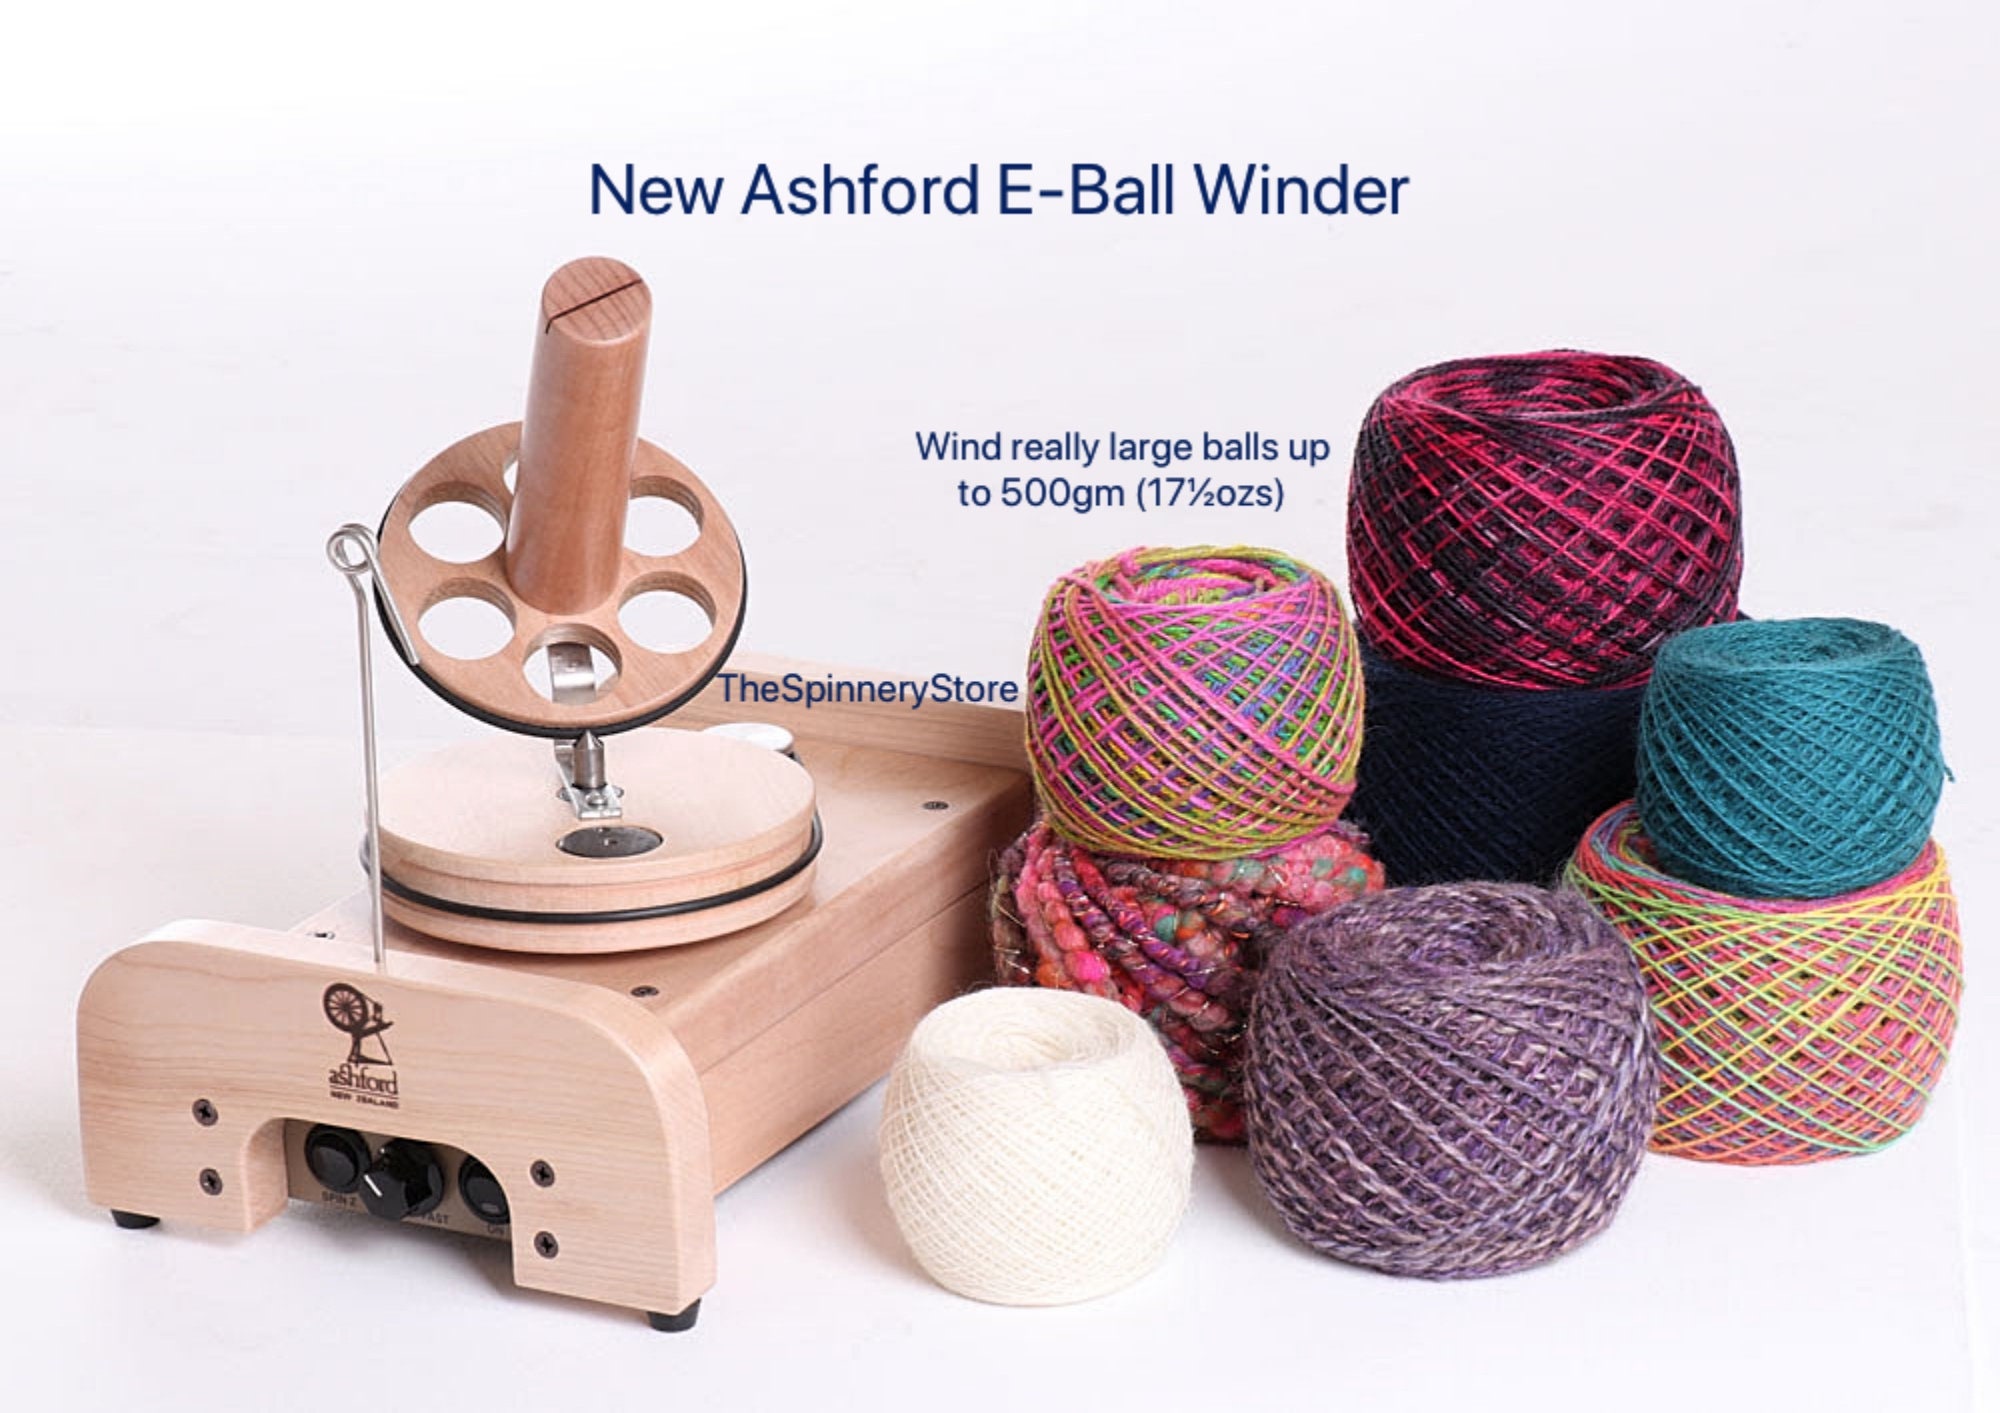 Ashford Electric Ball Winder - Fiber to Yarn